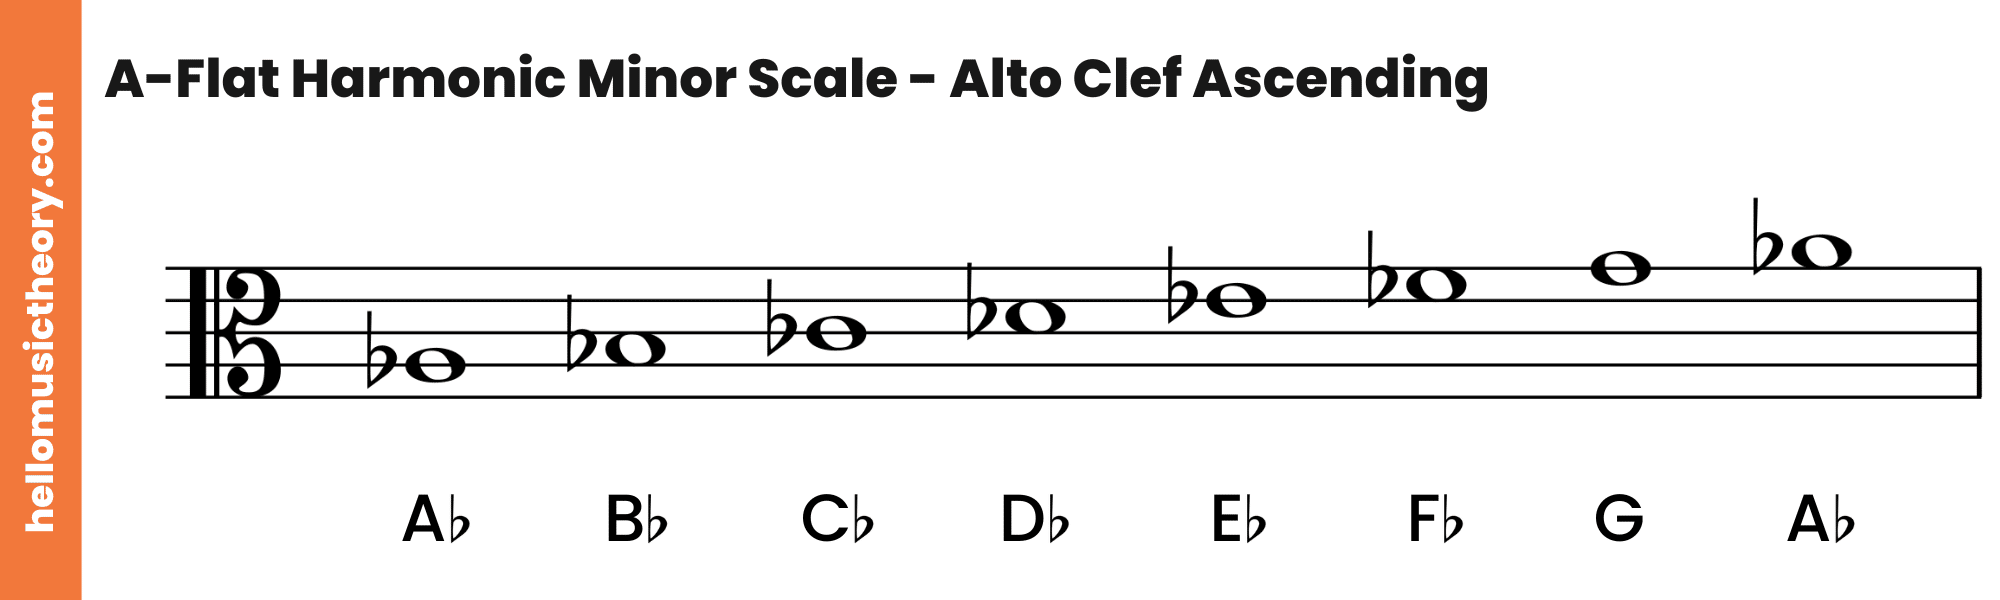 A-Flat Harmonic Minor Scale Alto Clef Ascending